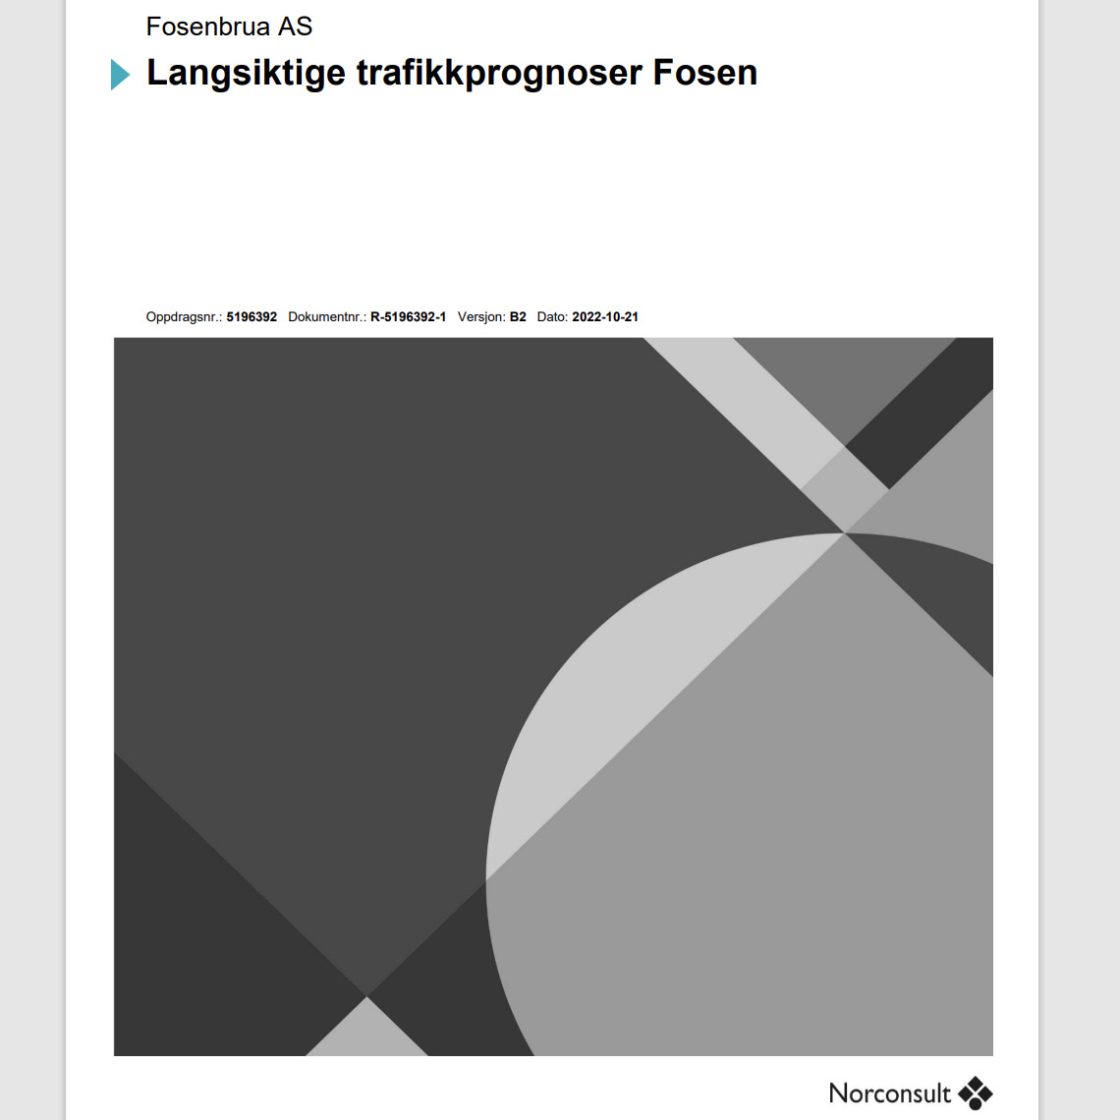 Rapport: Langsiktige trafikkprognoser Fosen (Norconsult, mai 2023)